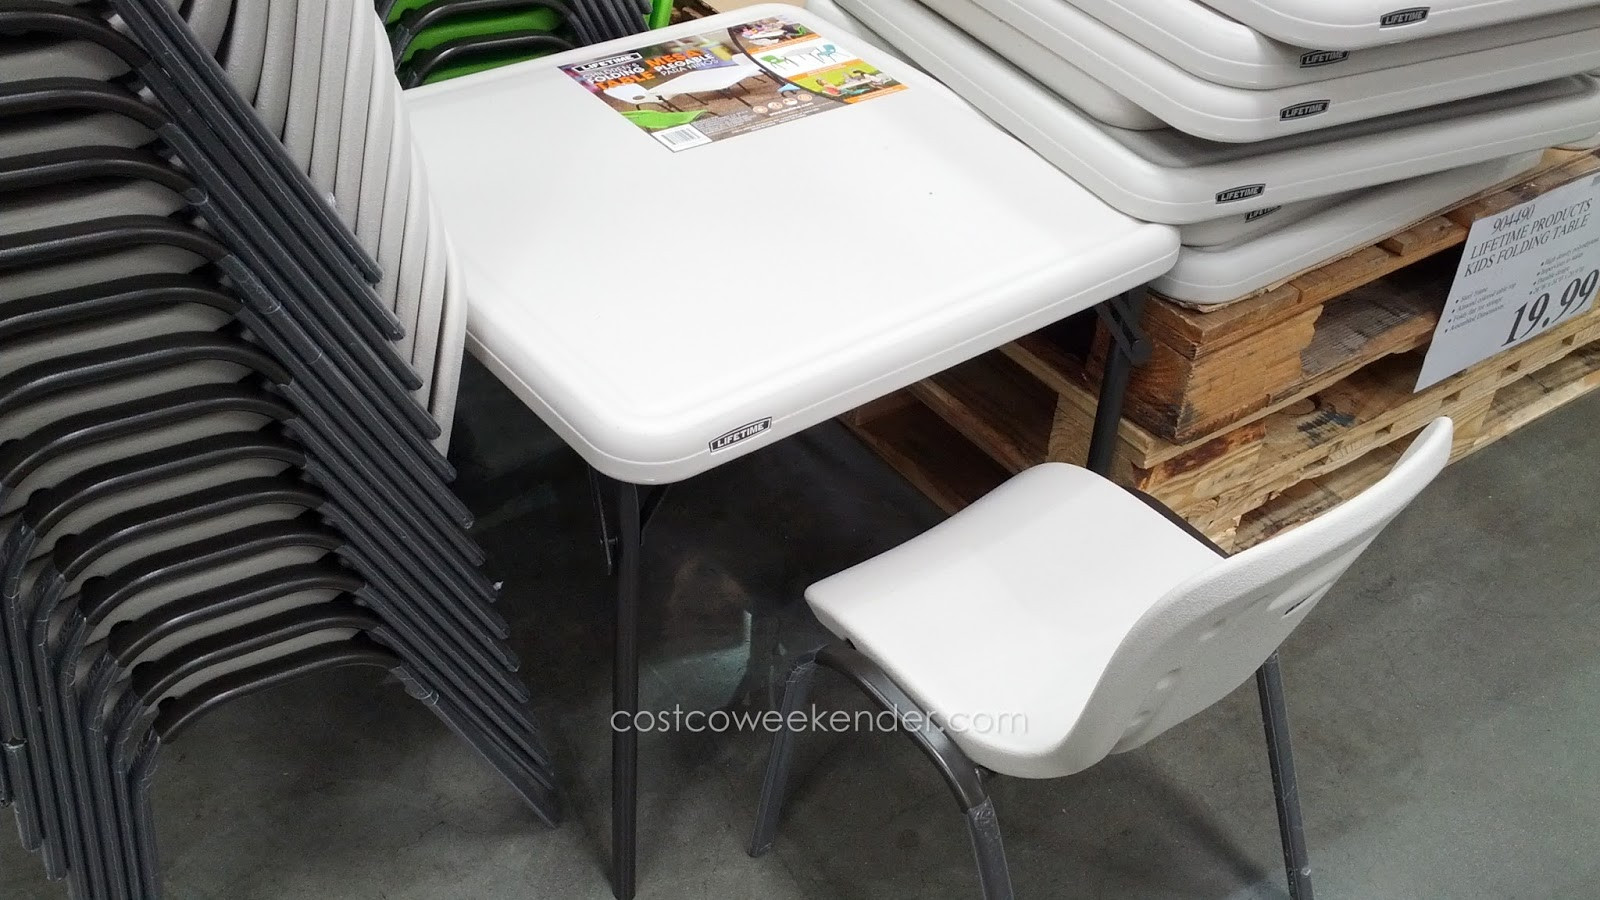 Costco Kids Chair
 Lifetime Children s Folding Table